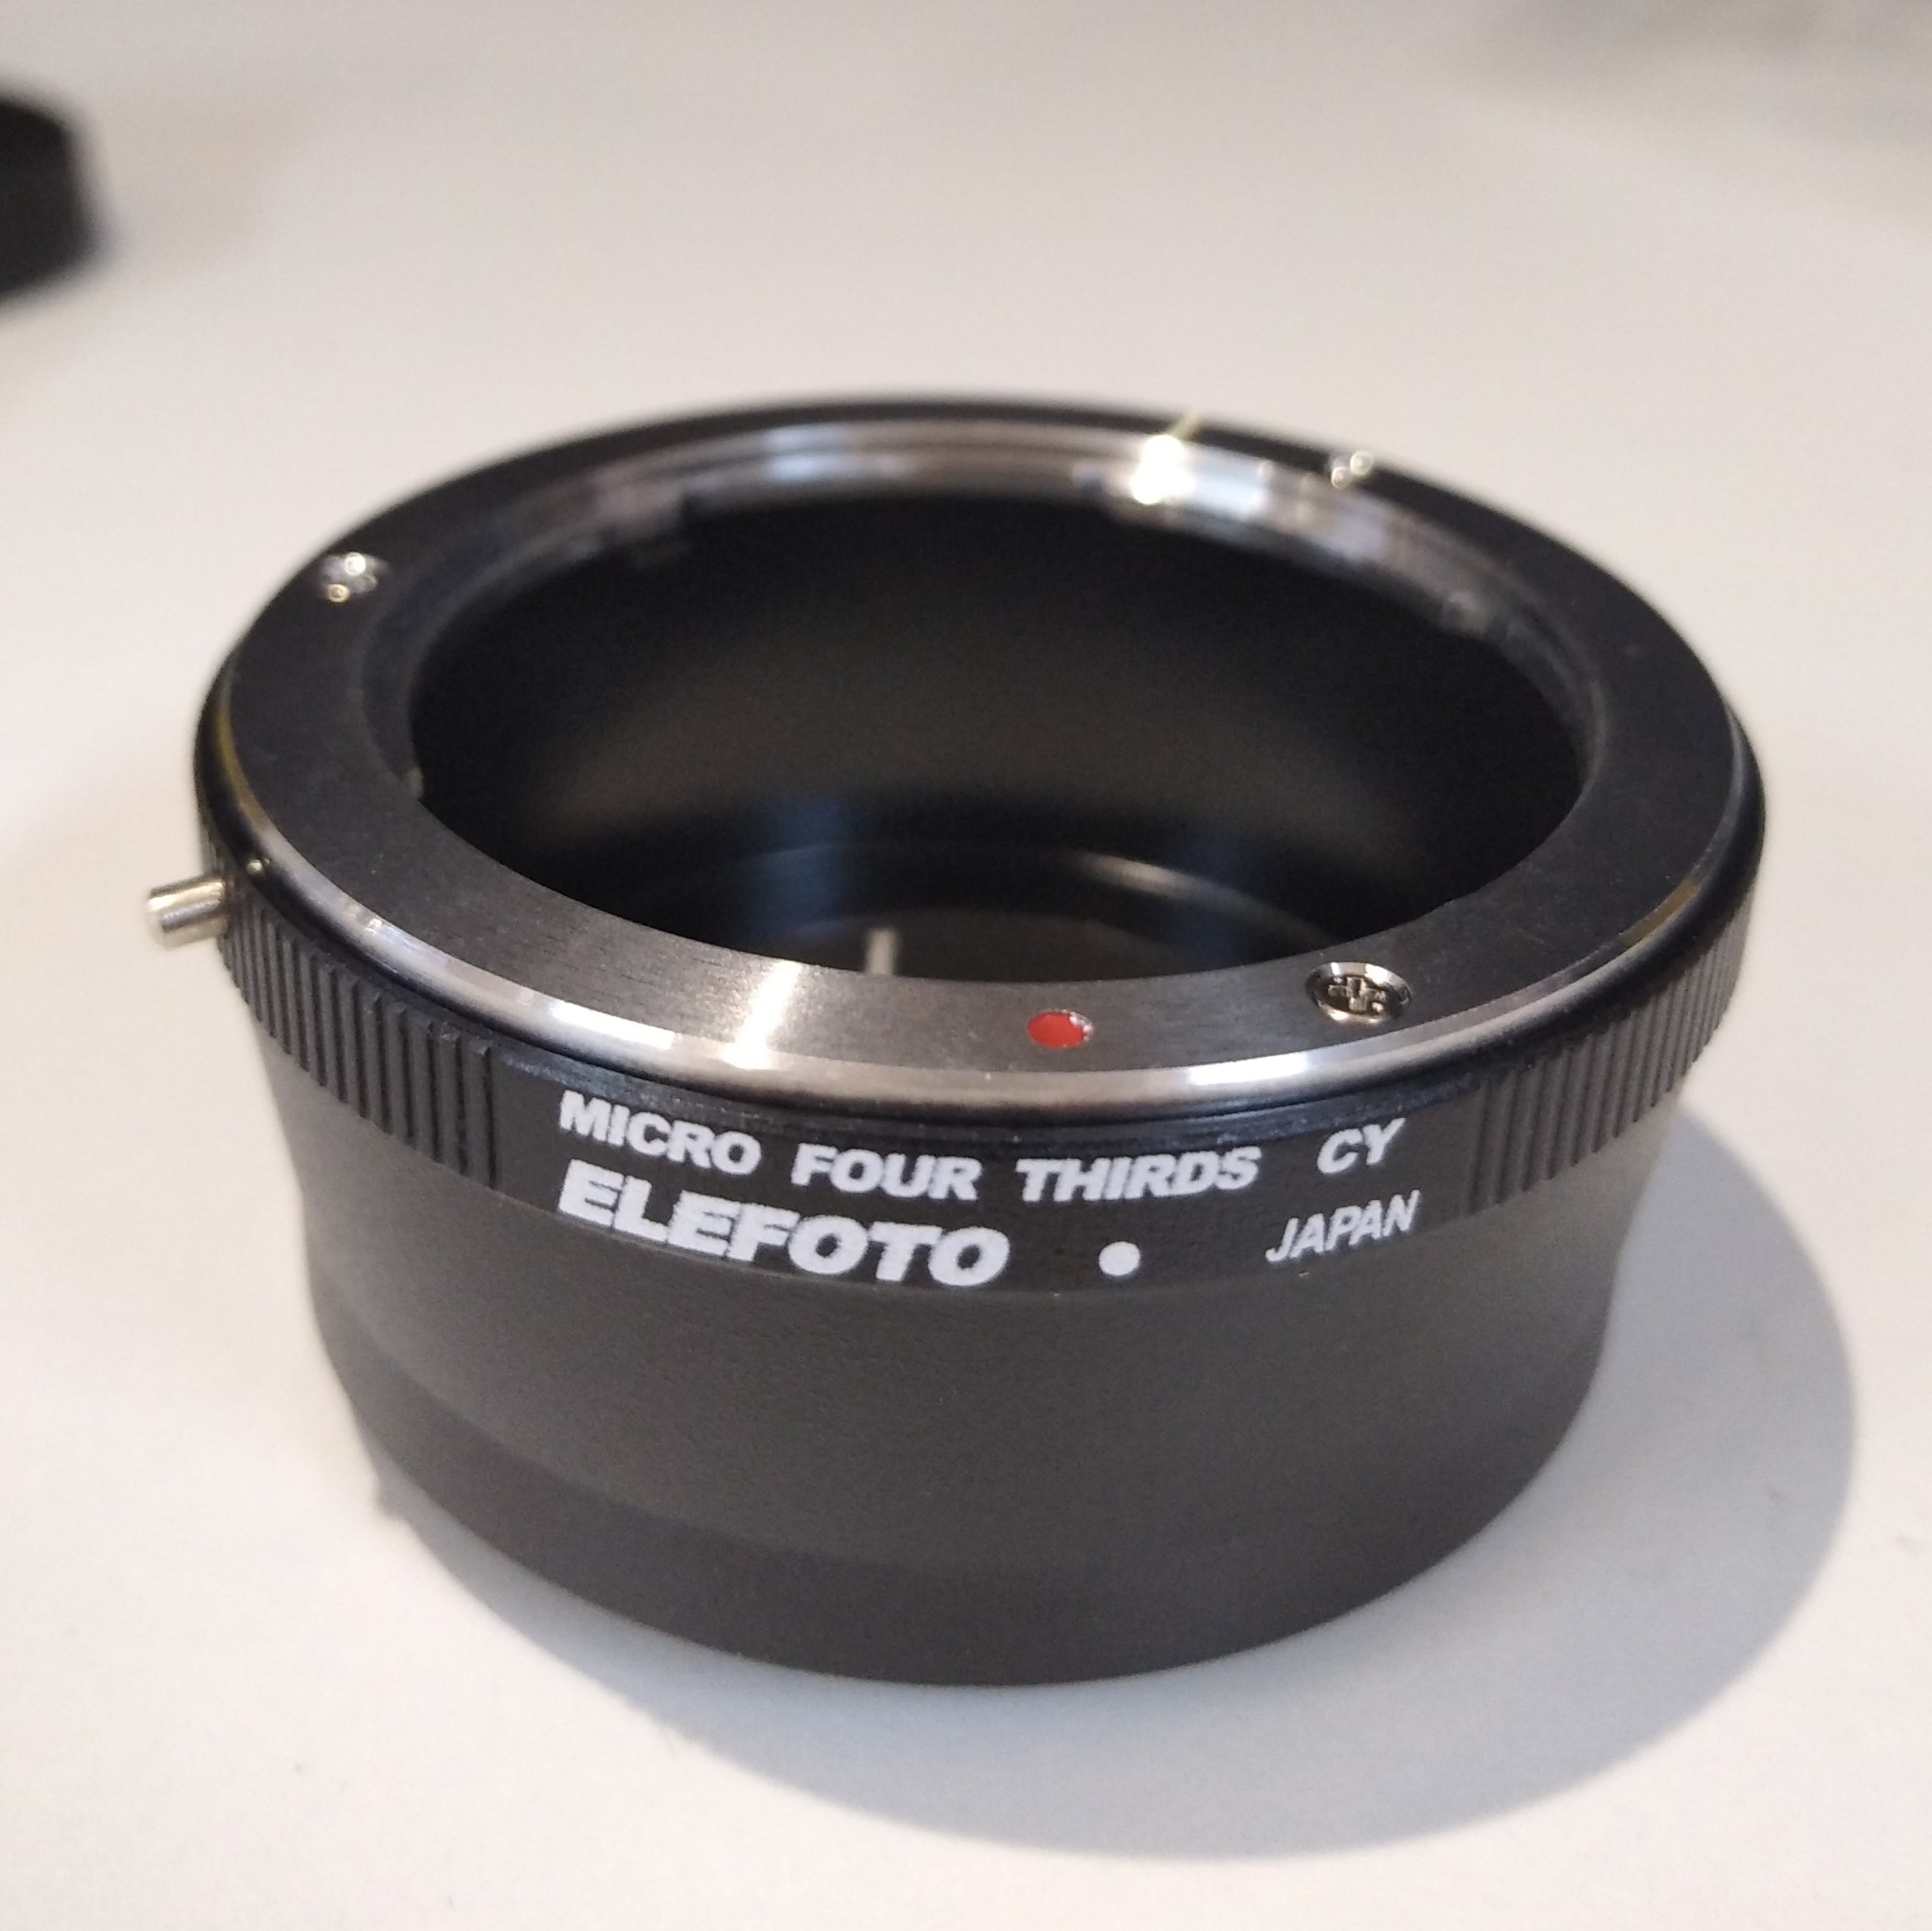 Elefoto lens adapter for Contax Yashica C/Y mount lens to Micro 4/3 MFT camera - GH4 OM-D G6 E-P5